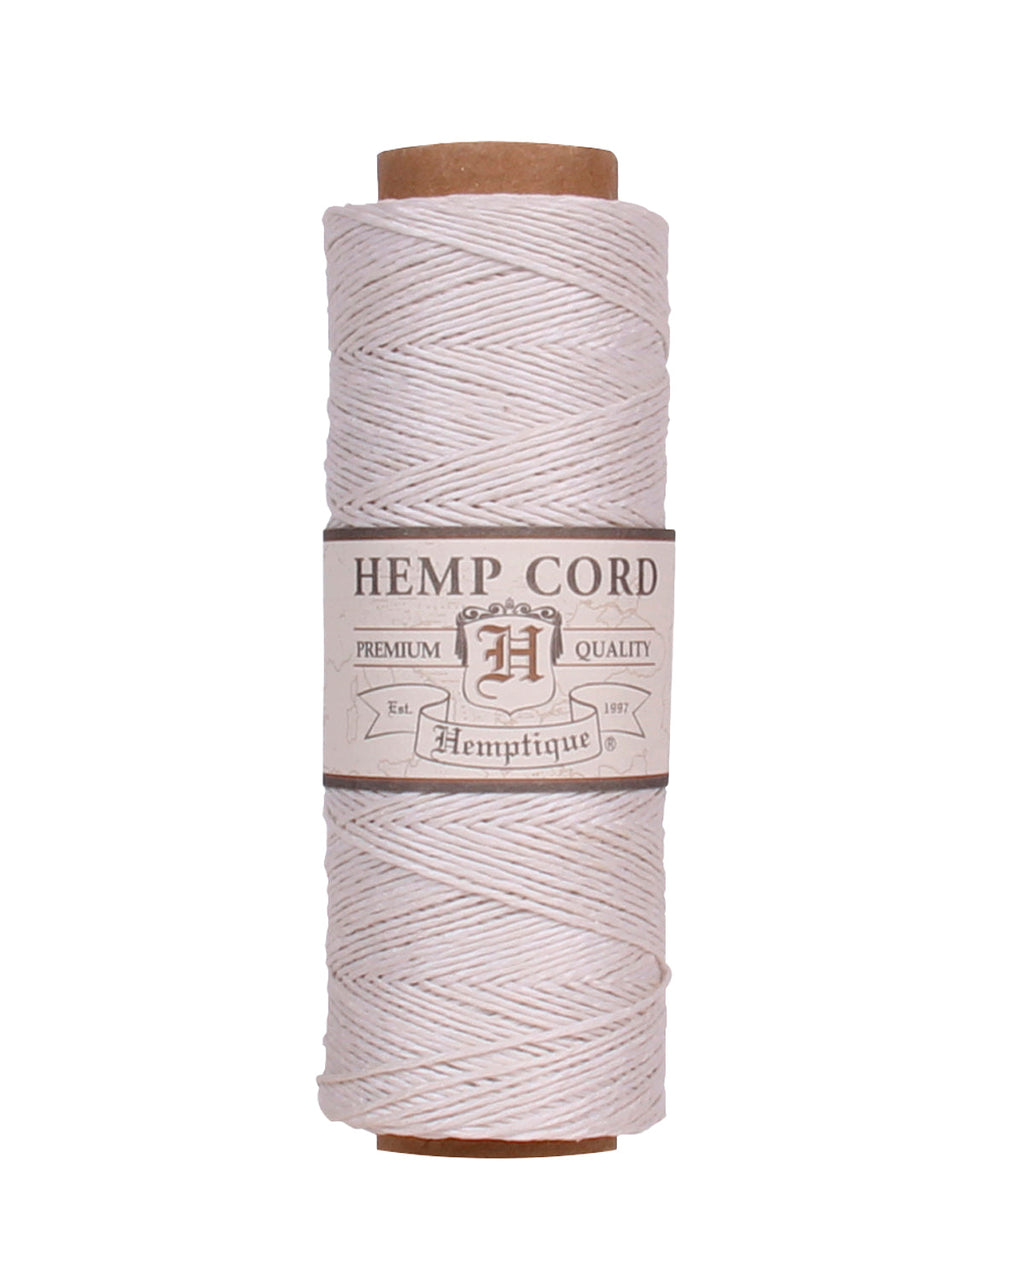 Hemptique Hemp Cord Spool #20 approx 62.5m 50g 1mm